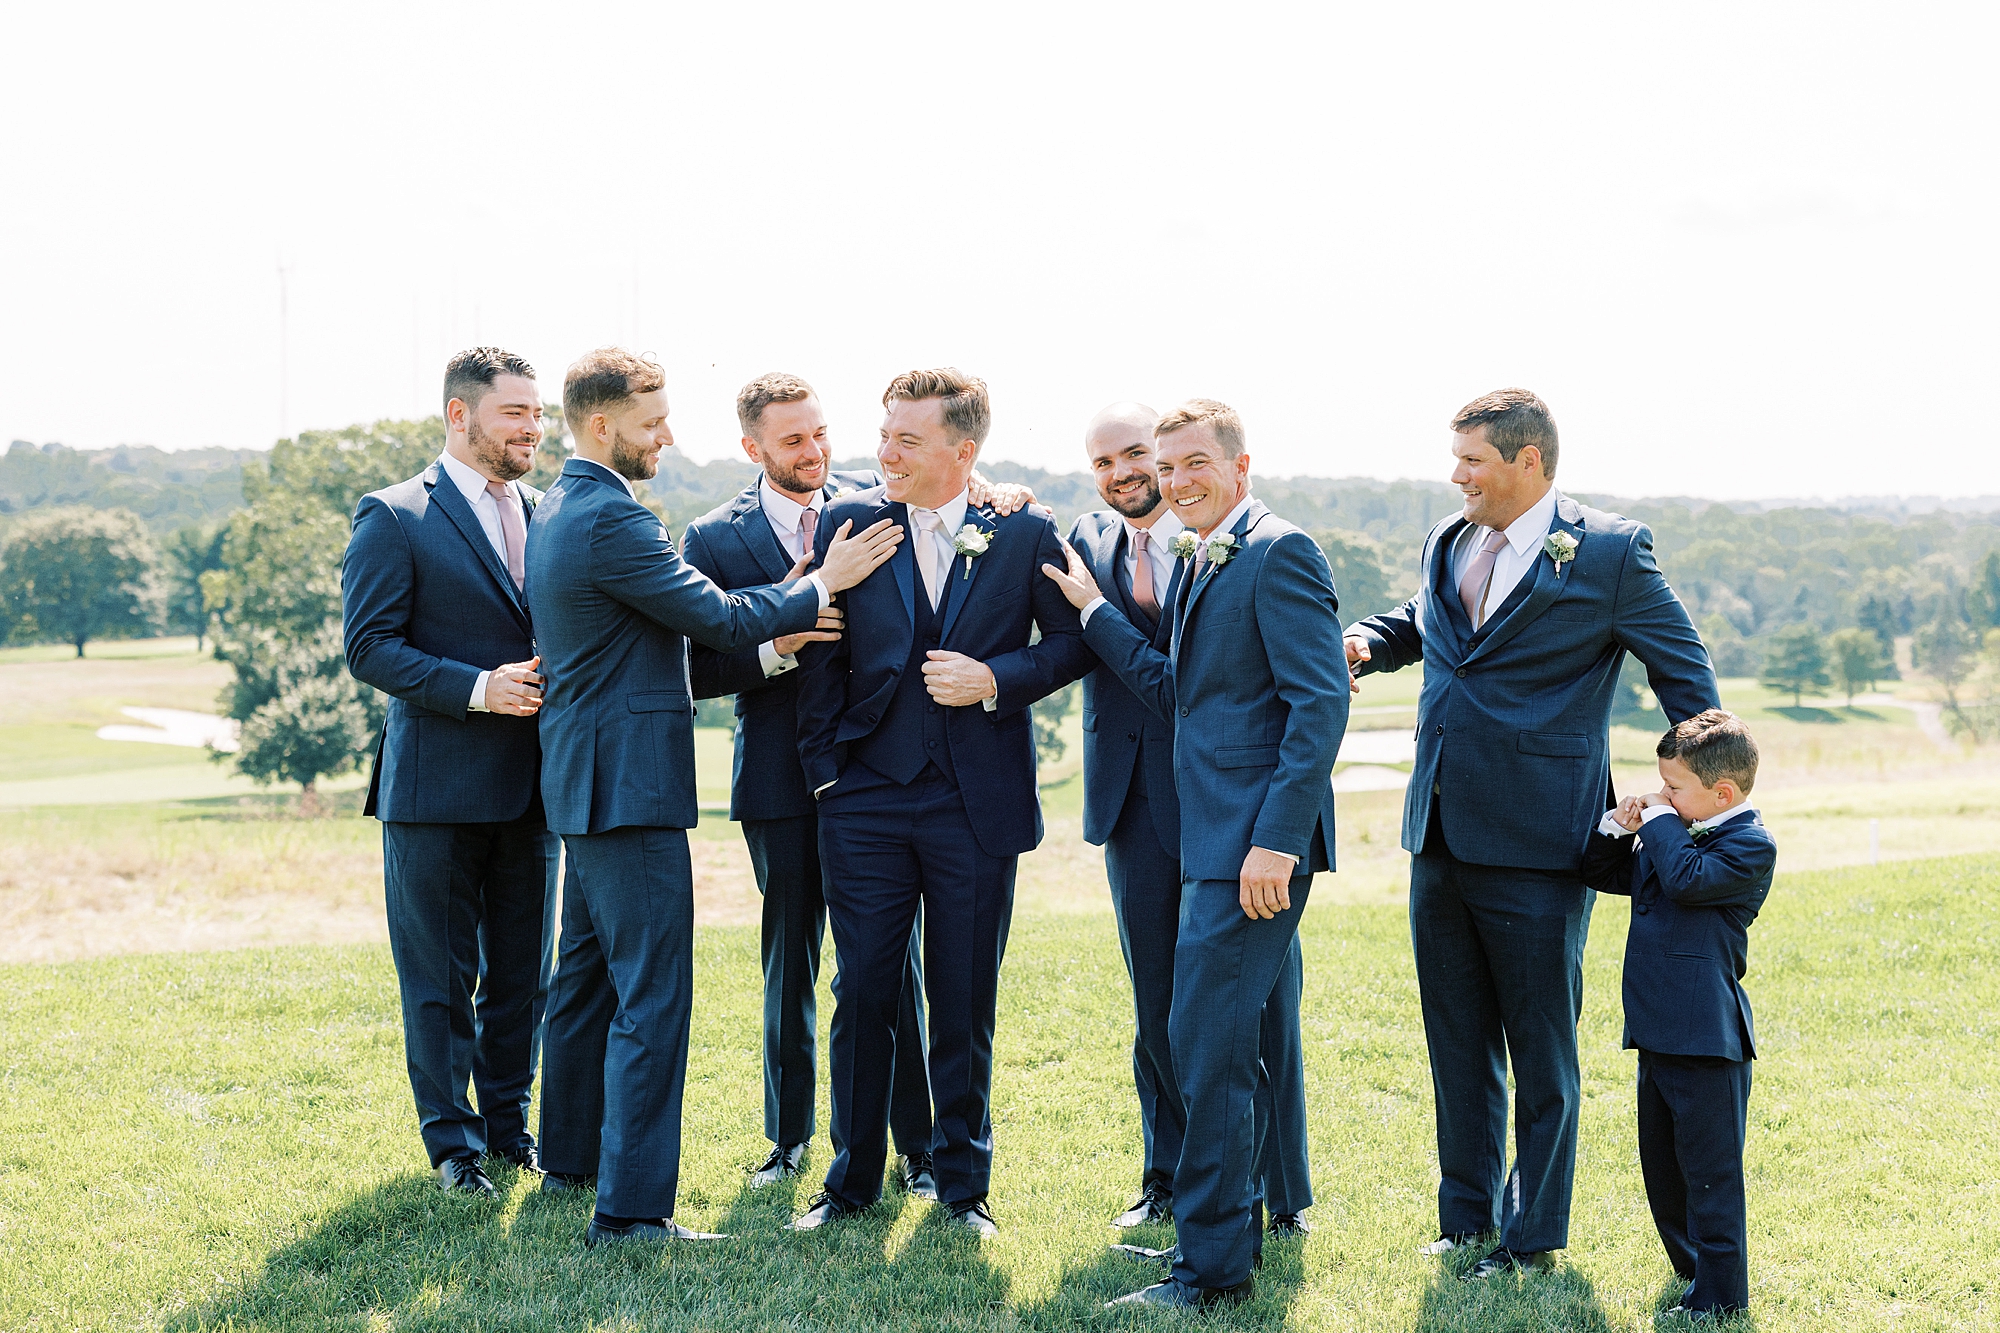 groom walks with groomsmen in navy suits in Philadelphia PA